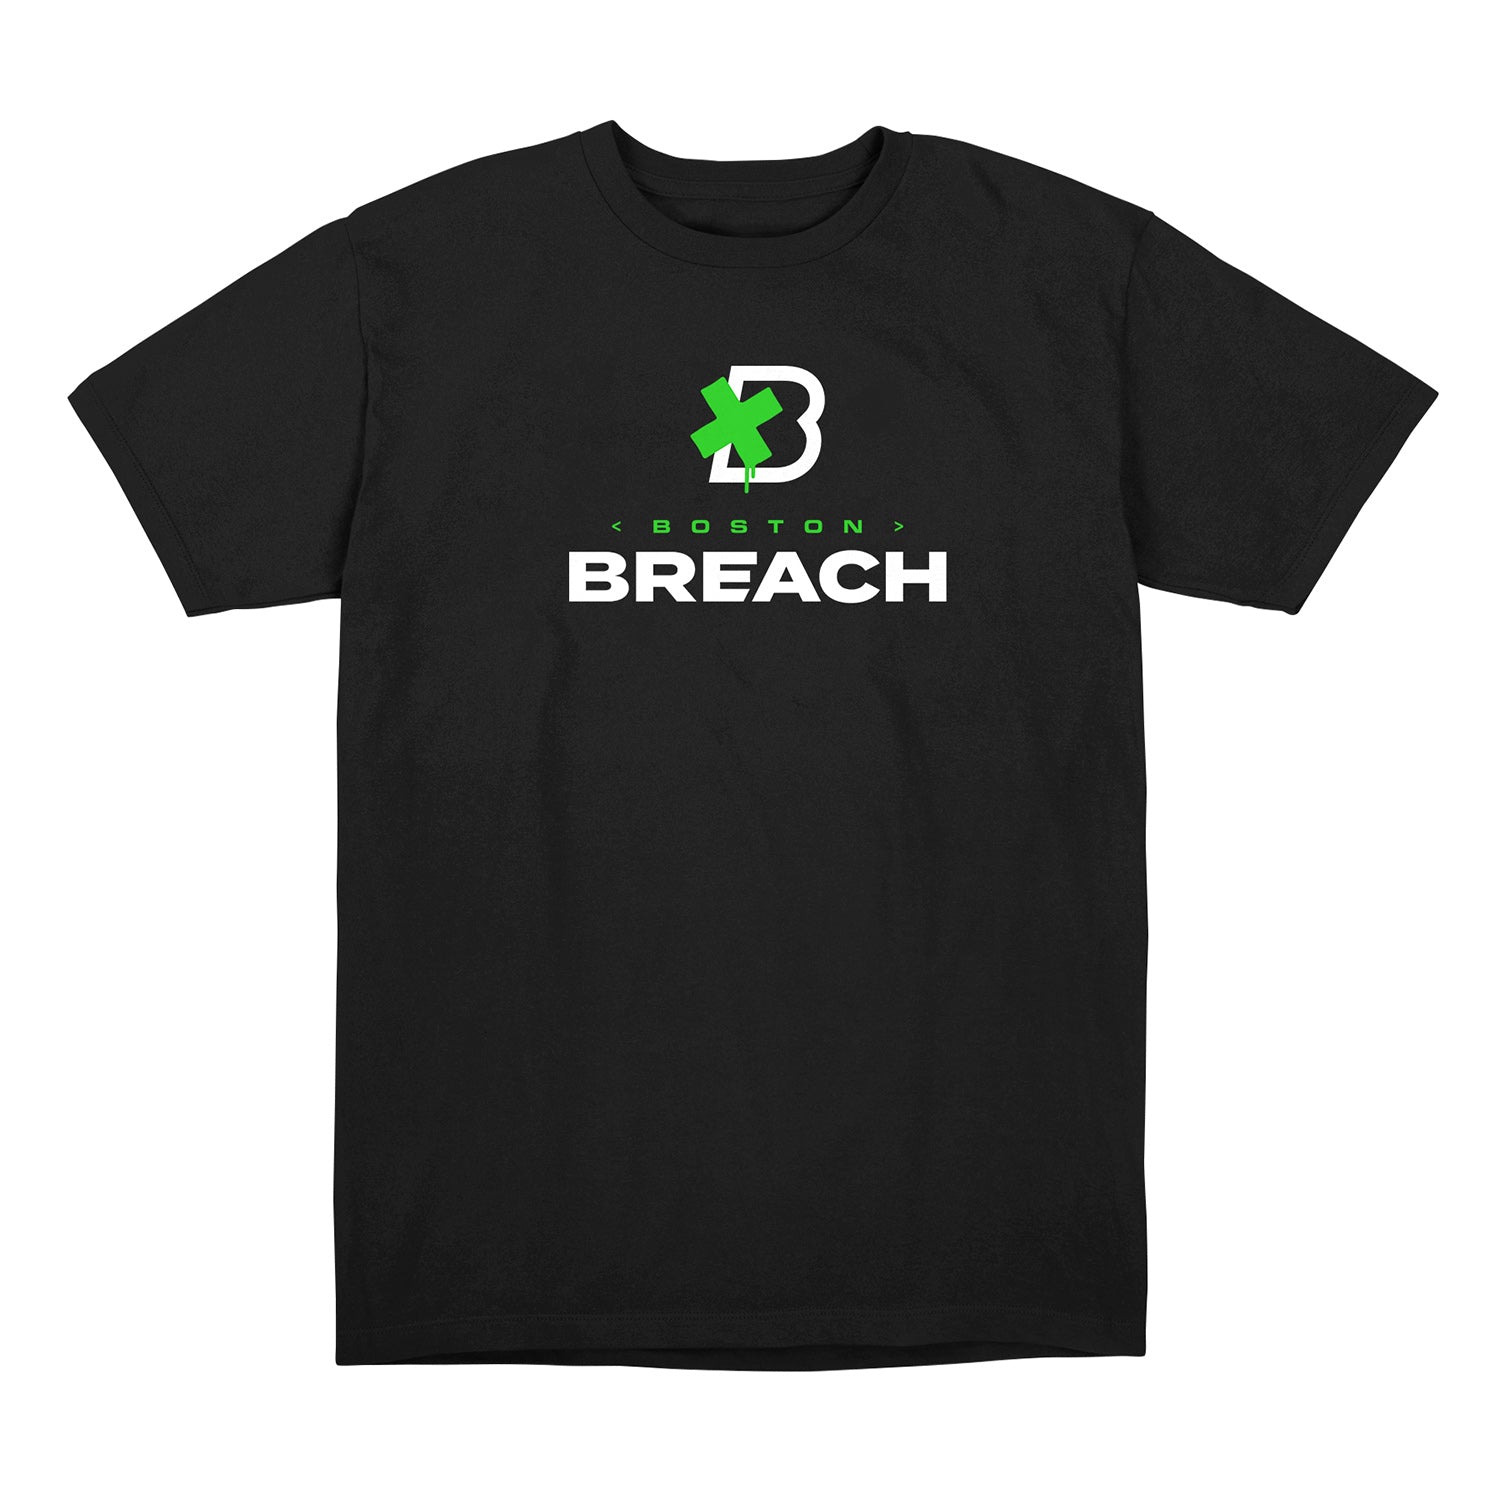 Boston Breach Black Primary Logo T-Shirt - Front View